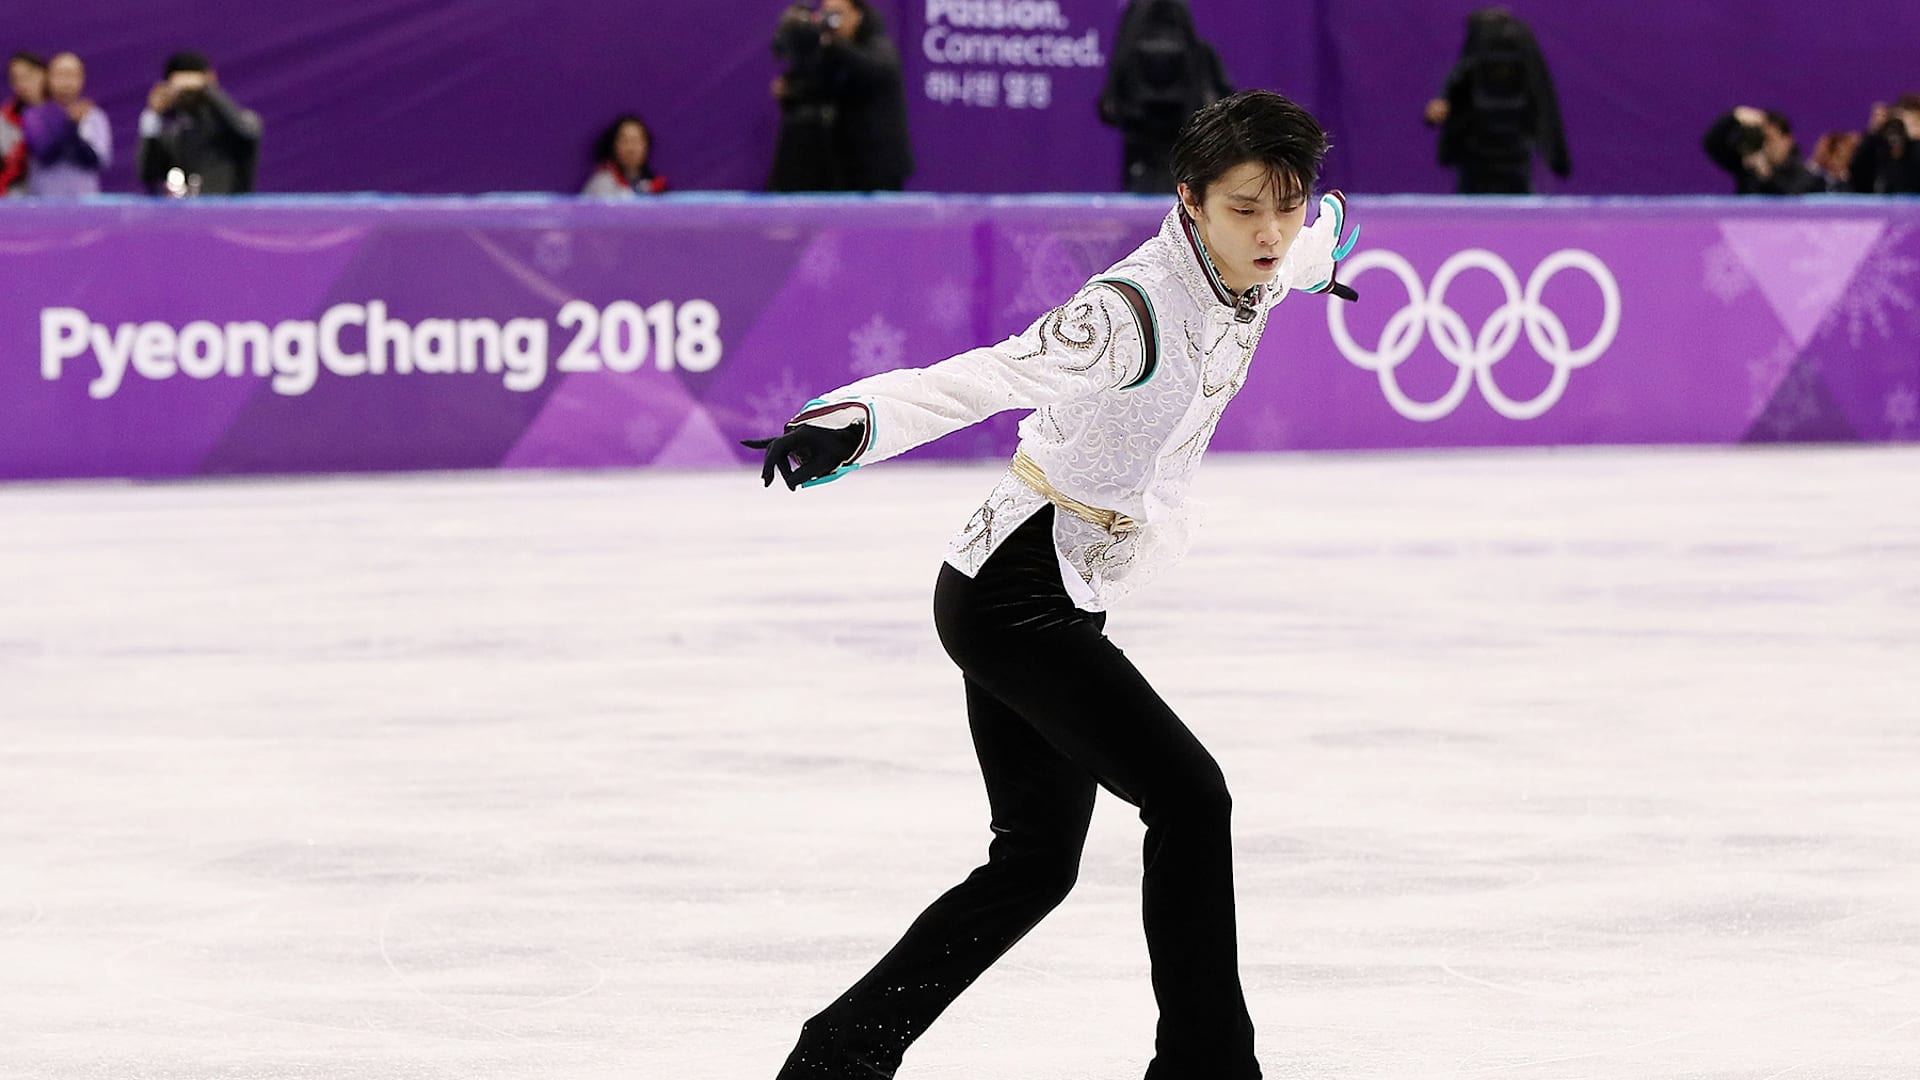 Yuzuru Hanyu 2018 Pyeongchang Olympic Memorial Skating Tags Stickers Decals 6pcs